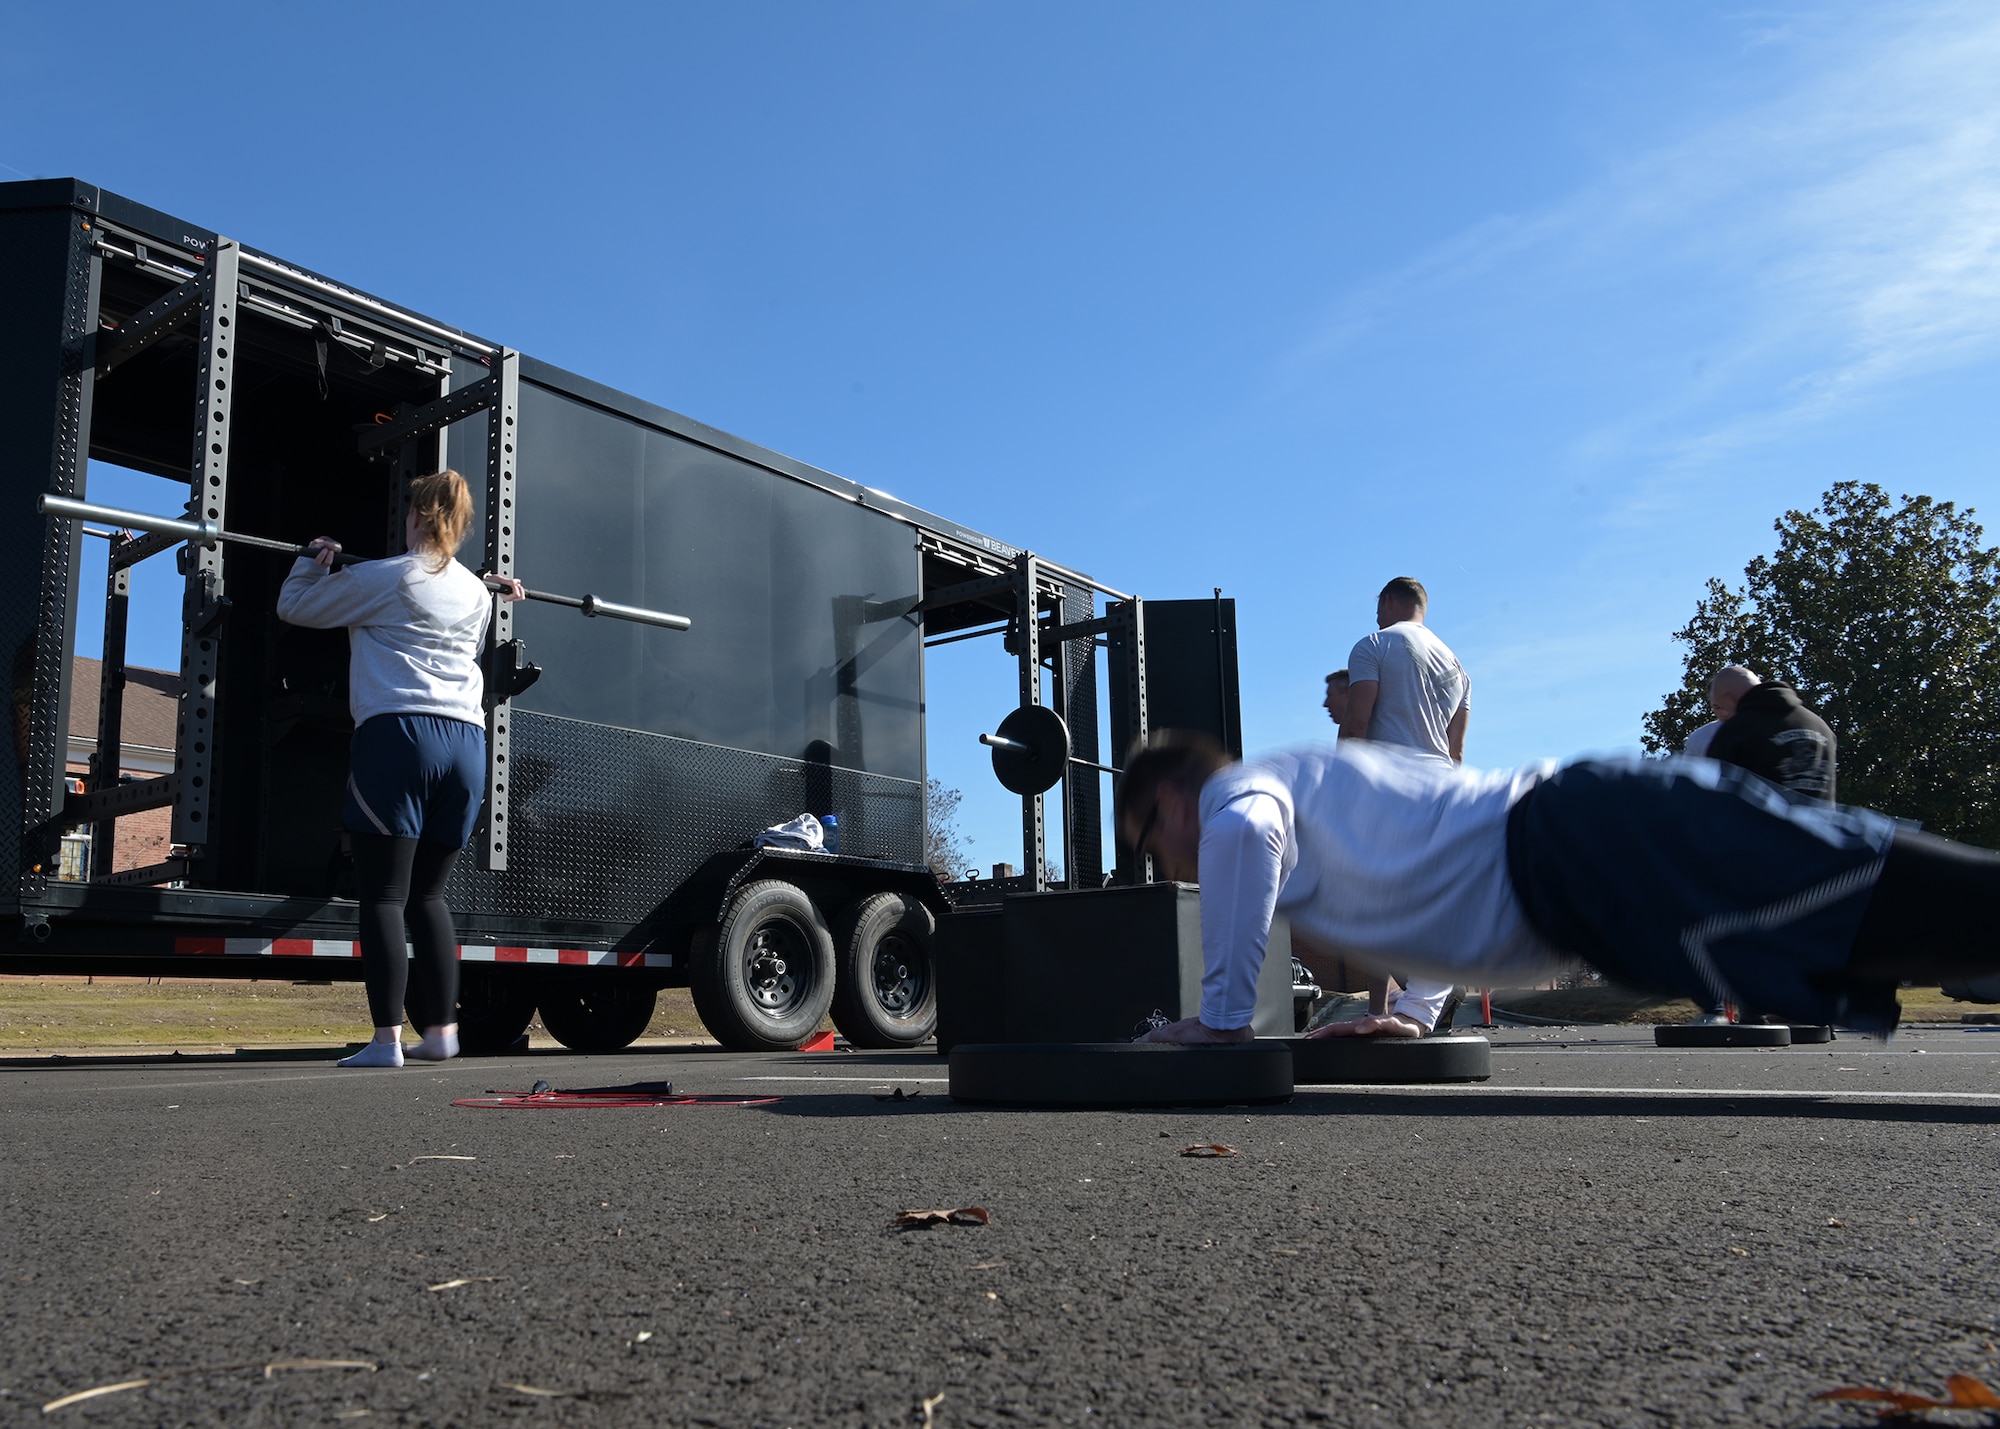 Airmen perform fitness exercises.